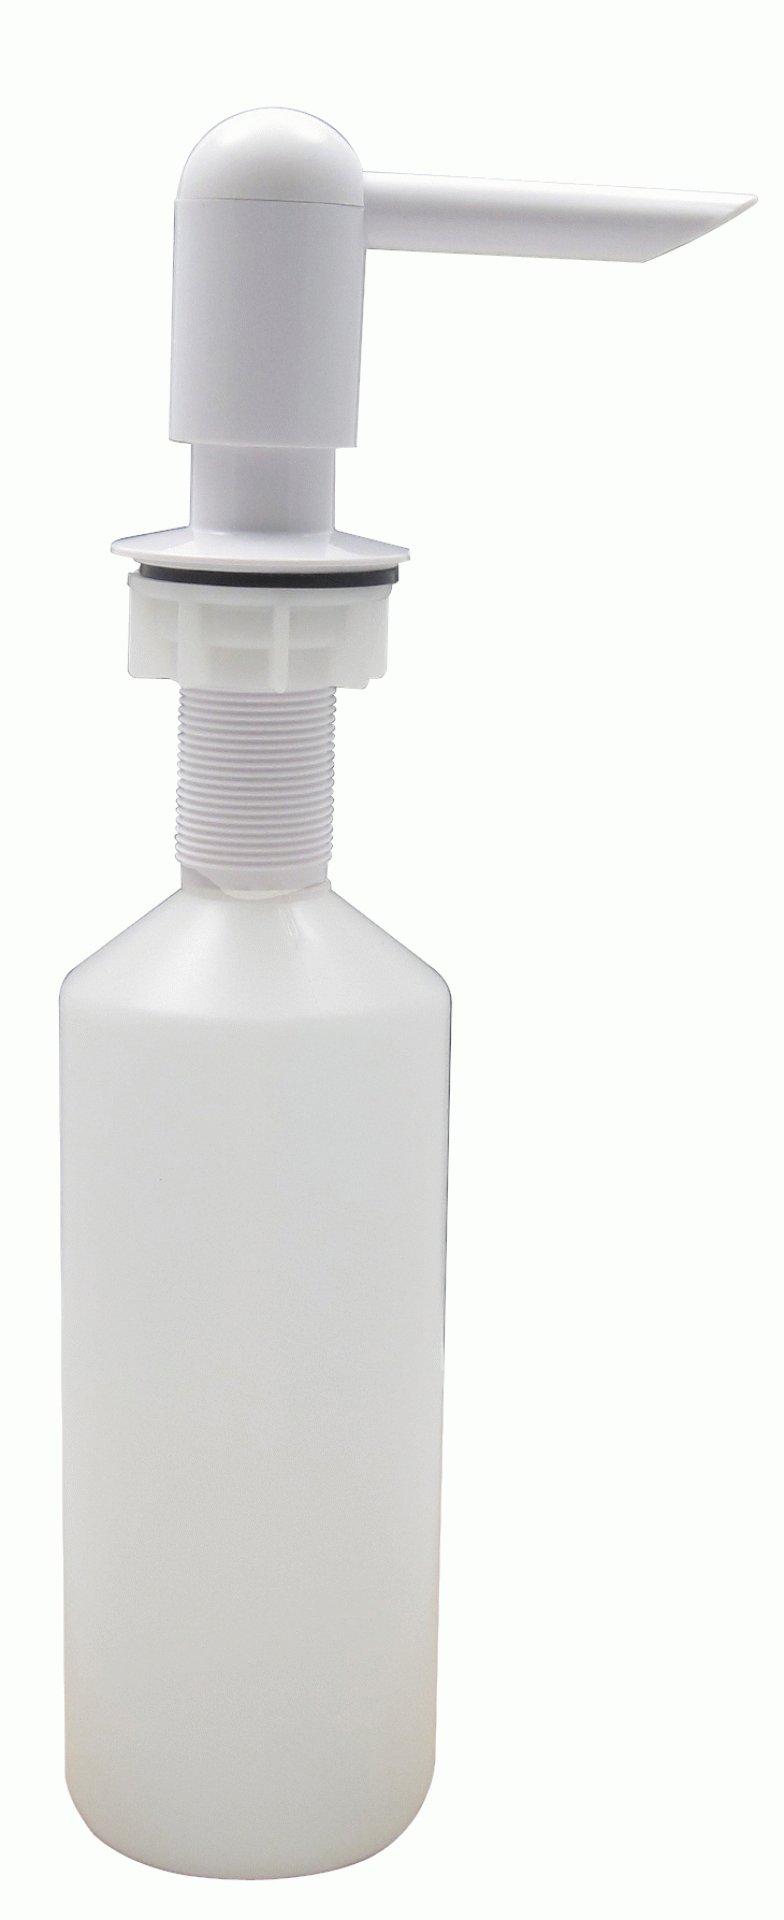 PHOENIX PRODUCTS INC. | PF281016 | Soap Dispenser White